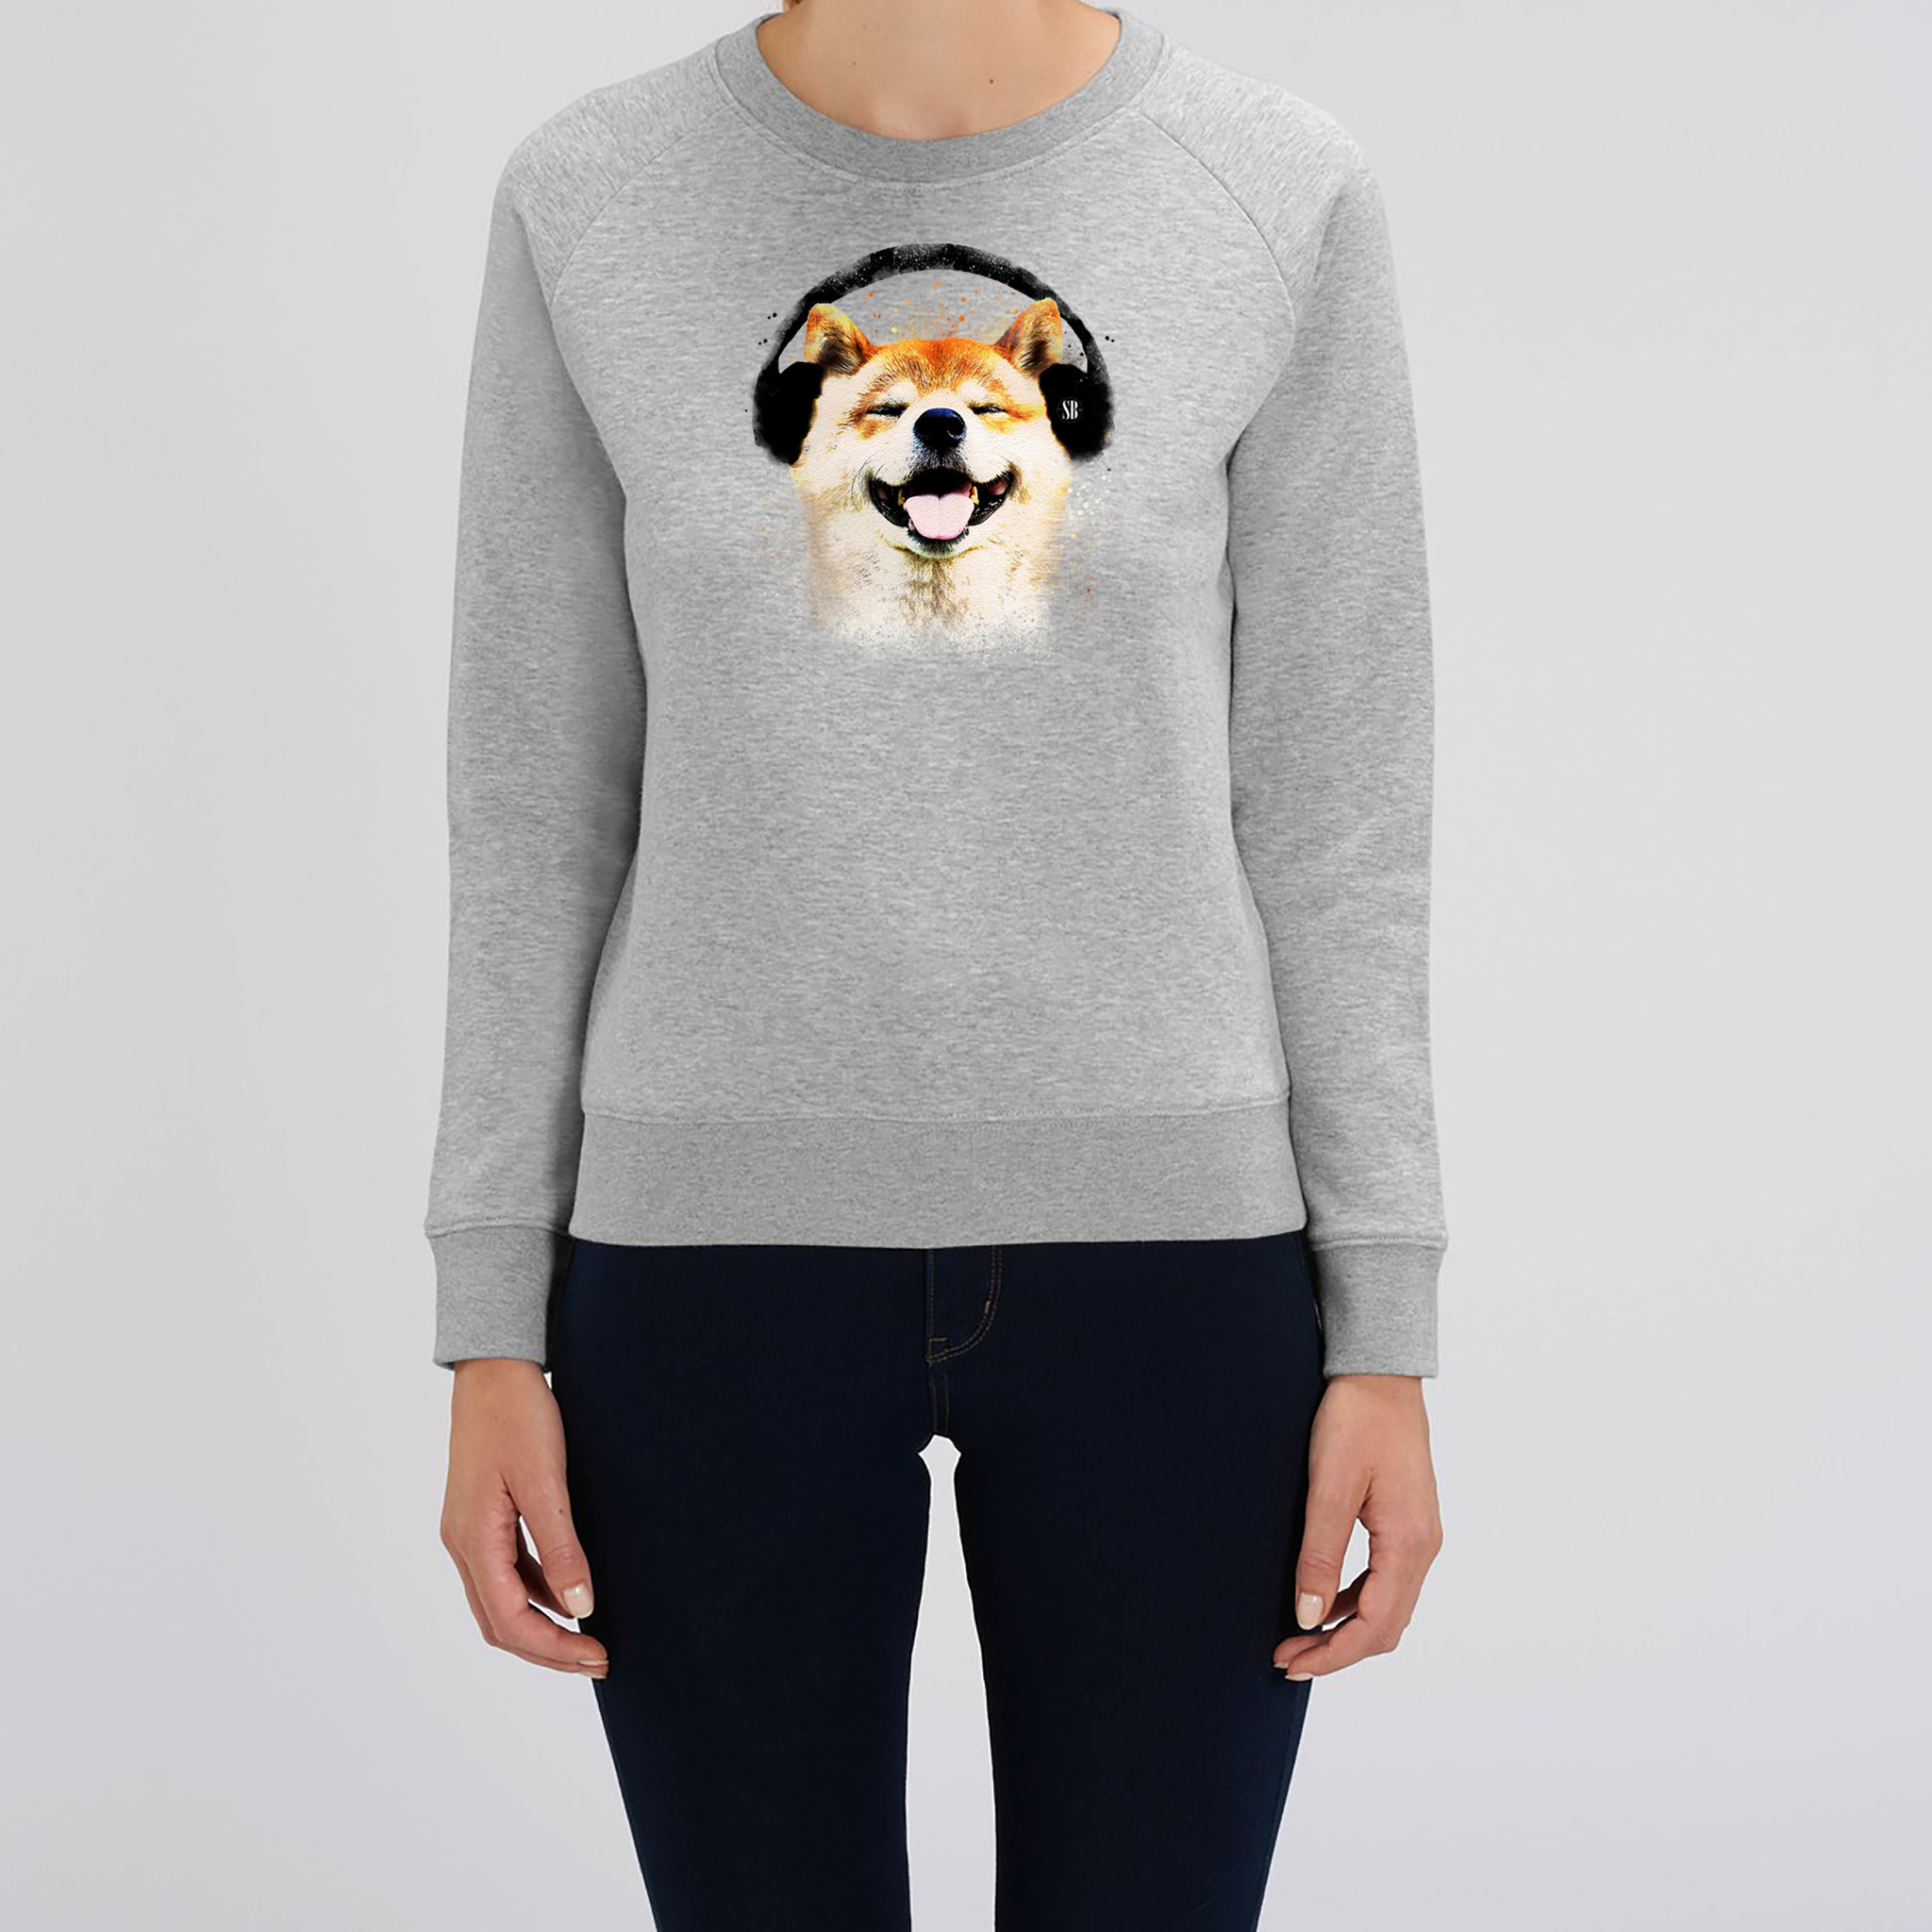 Shiba Boutique - Shiba Inu Dog Headphone Sweater Sweatshirt Women